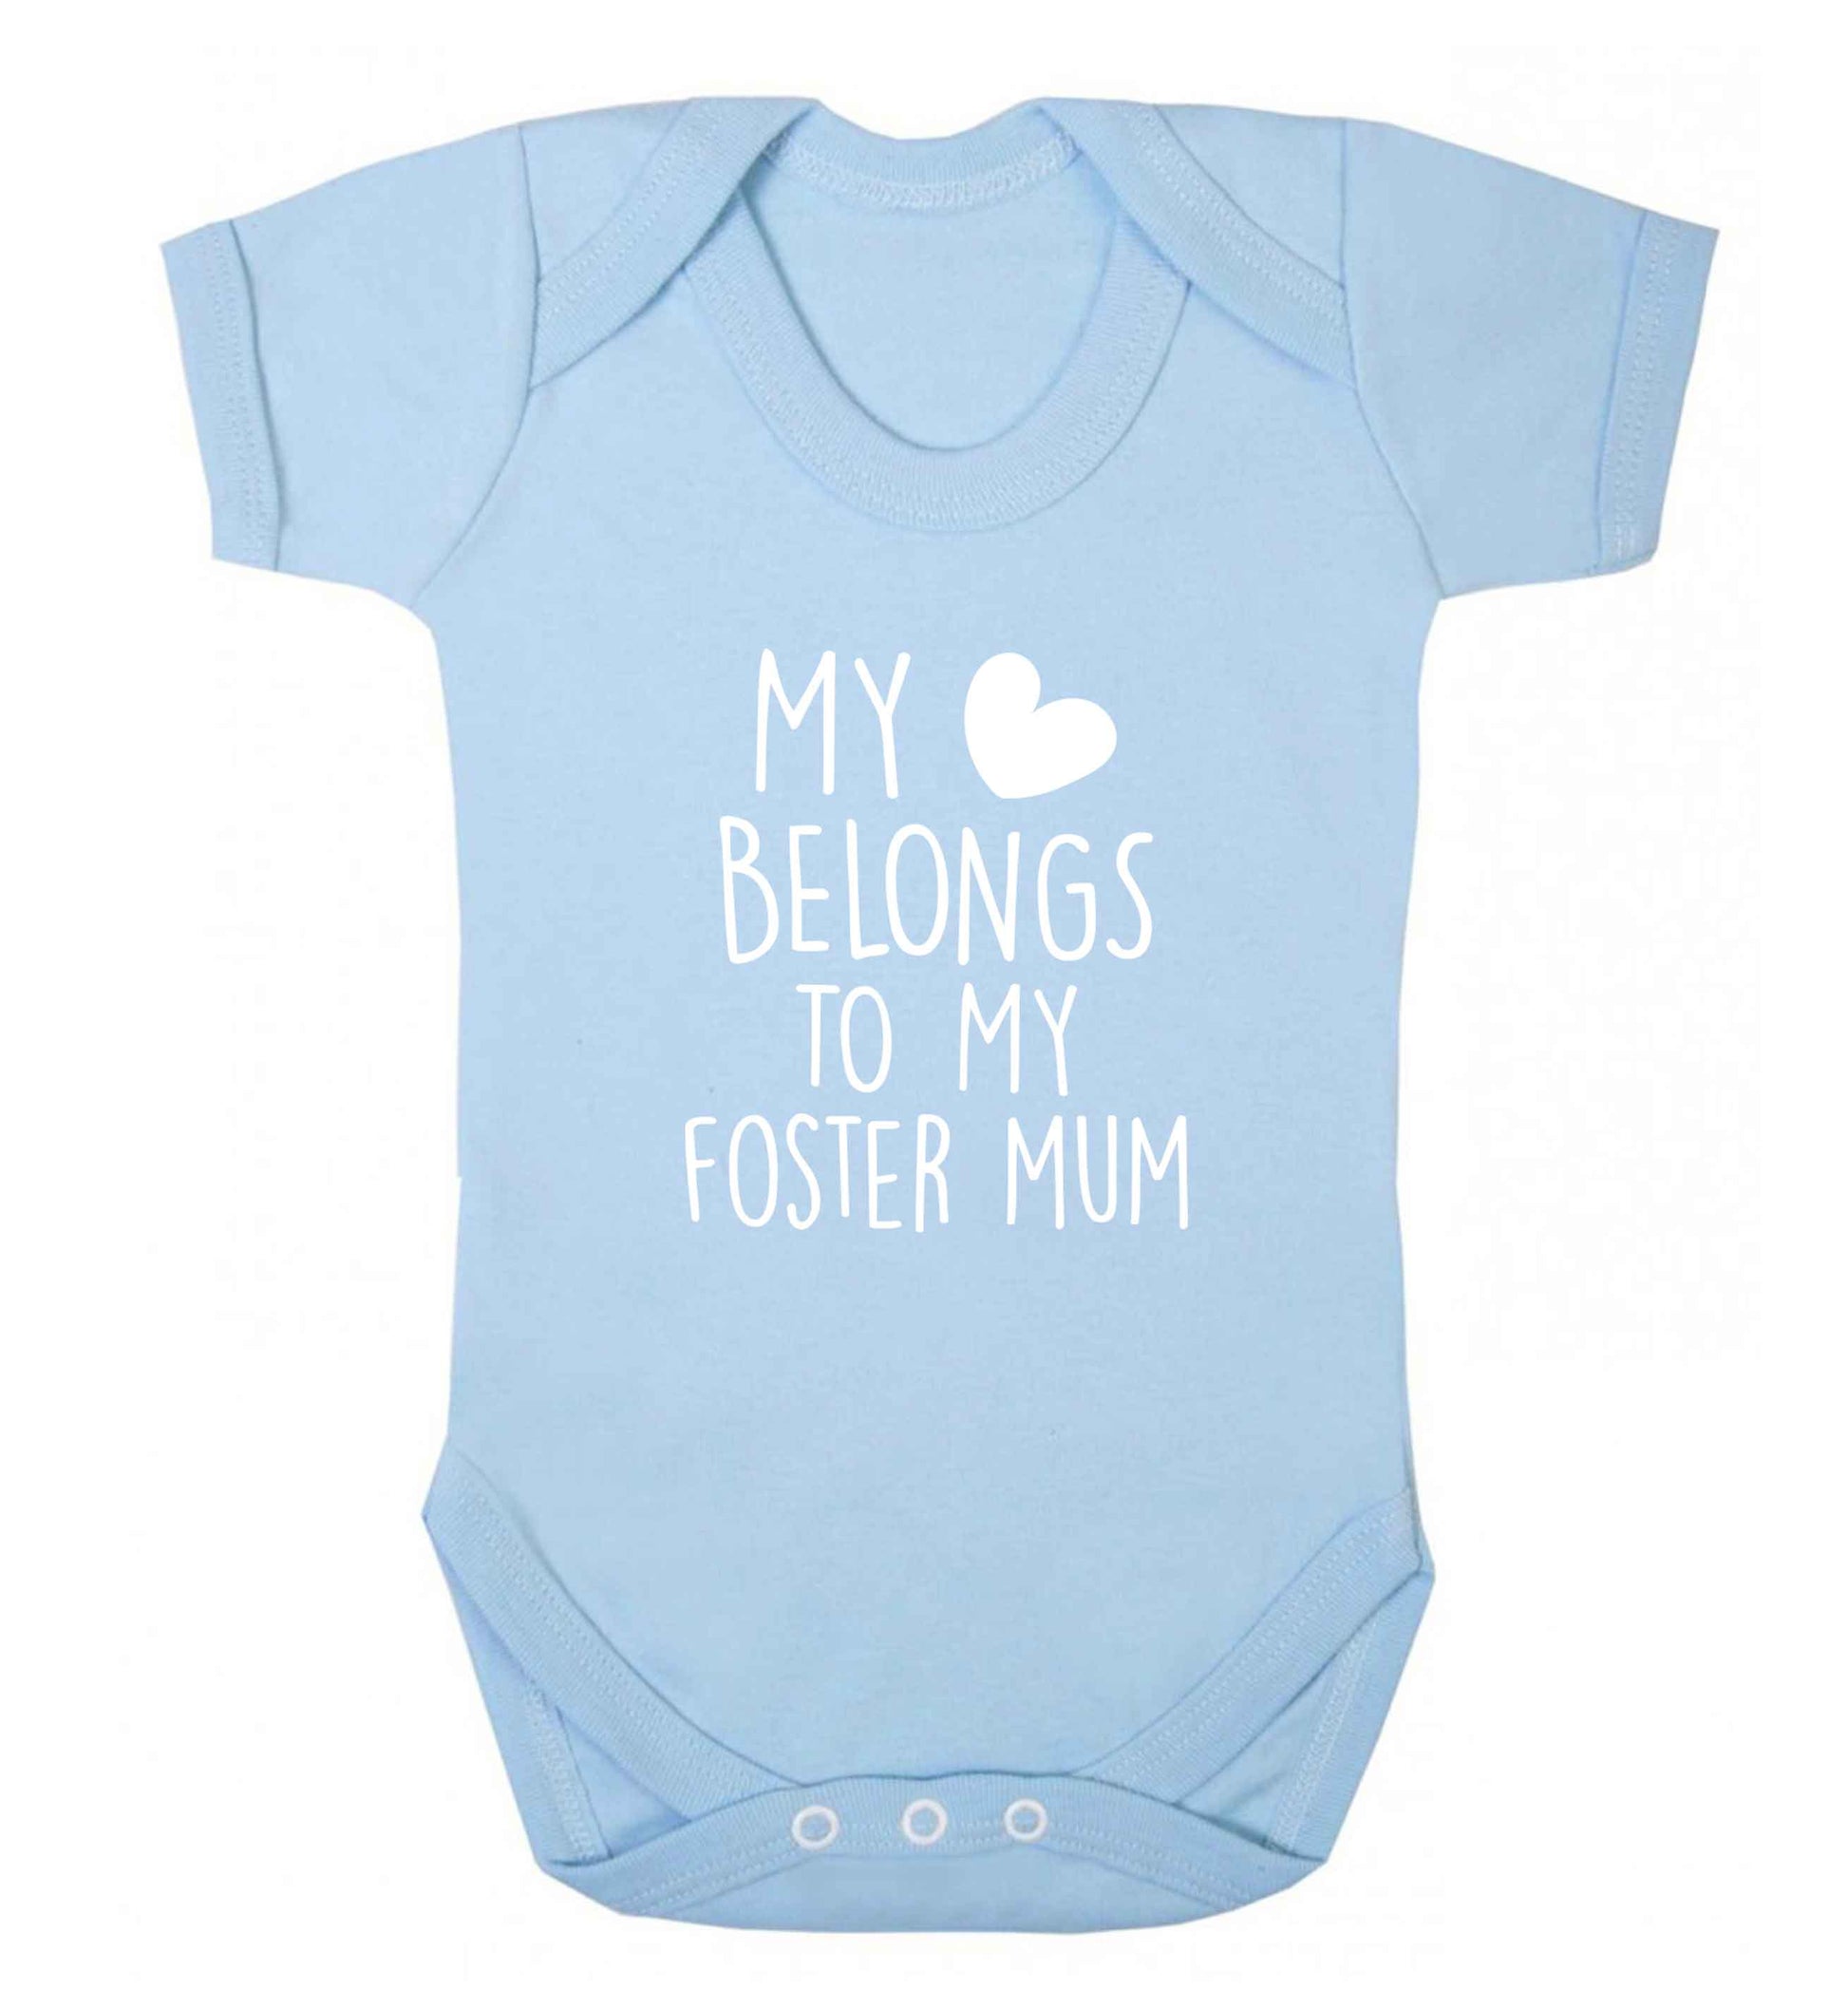 My heart belongs to my foster mum baby vest pale blue 18-24 months